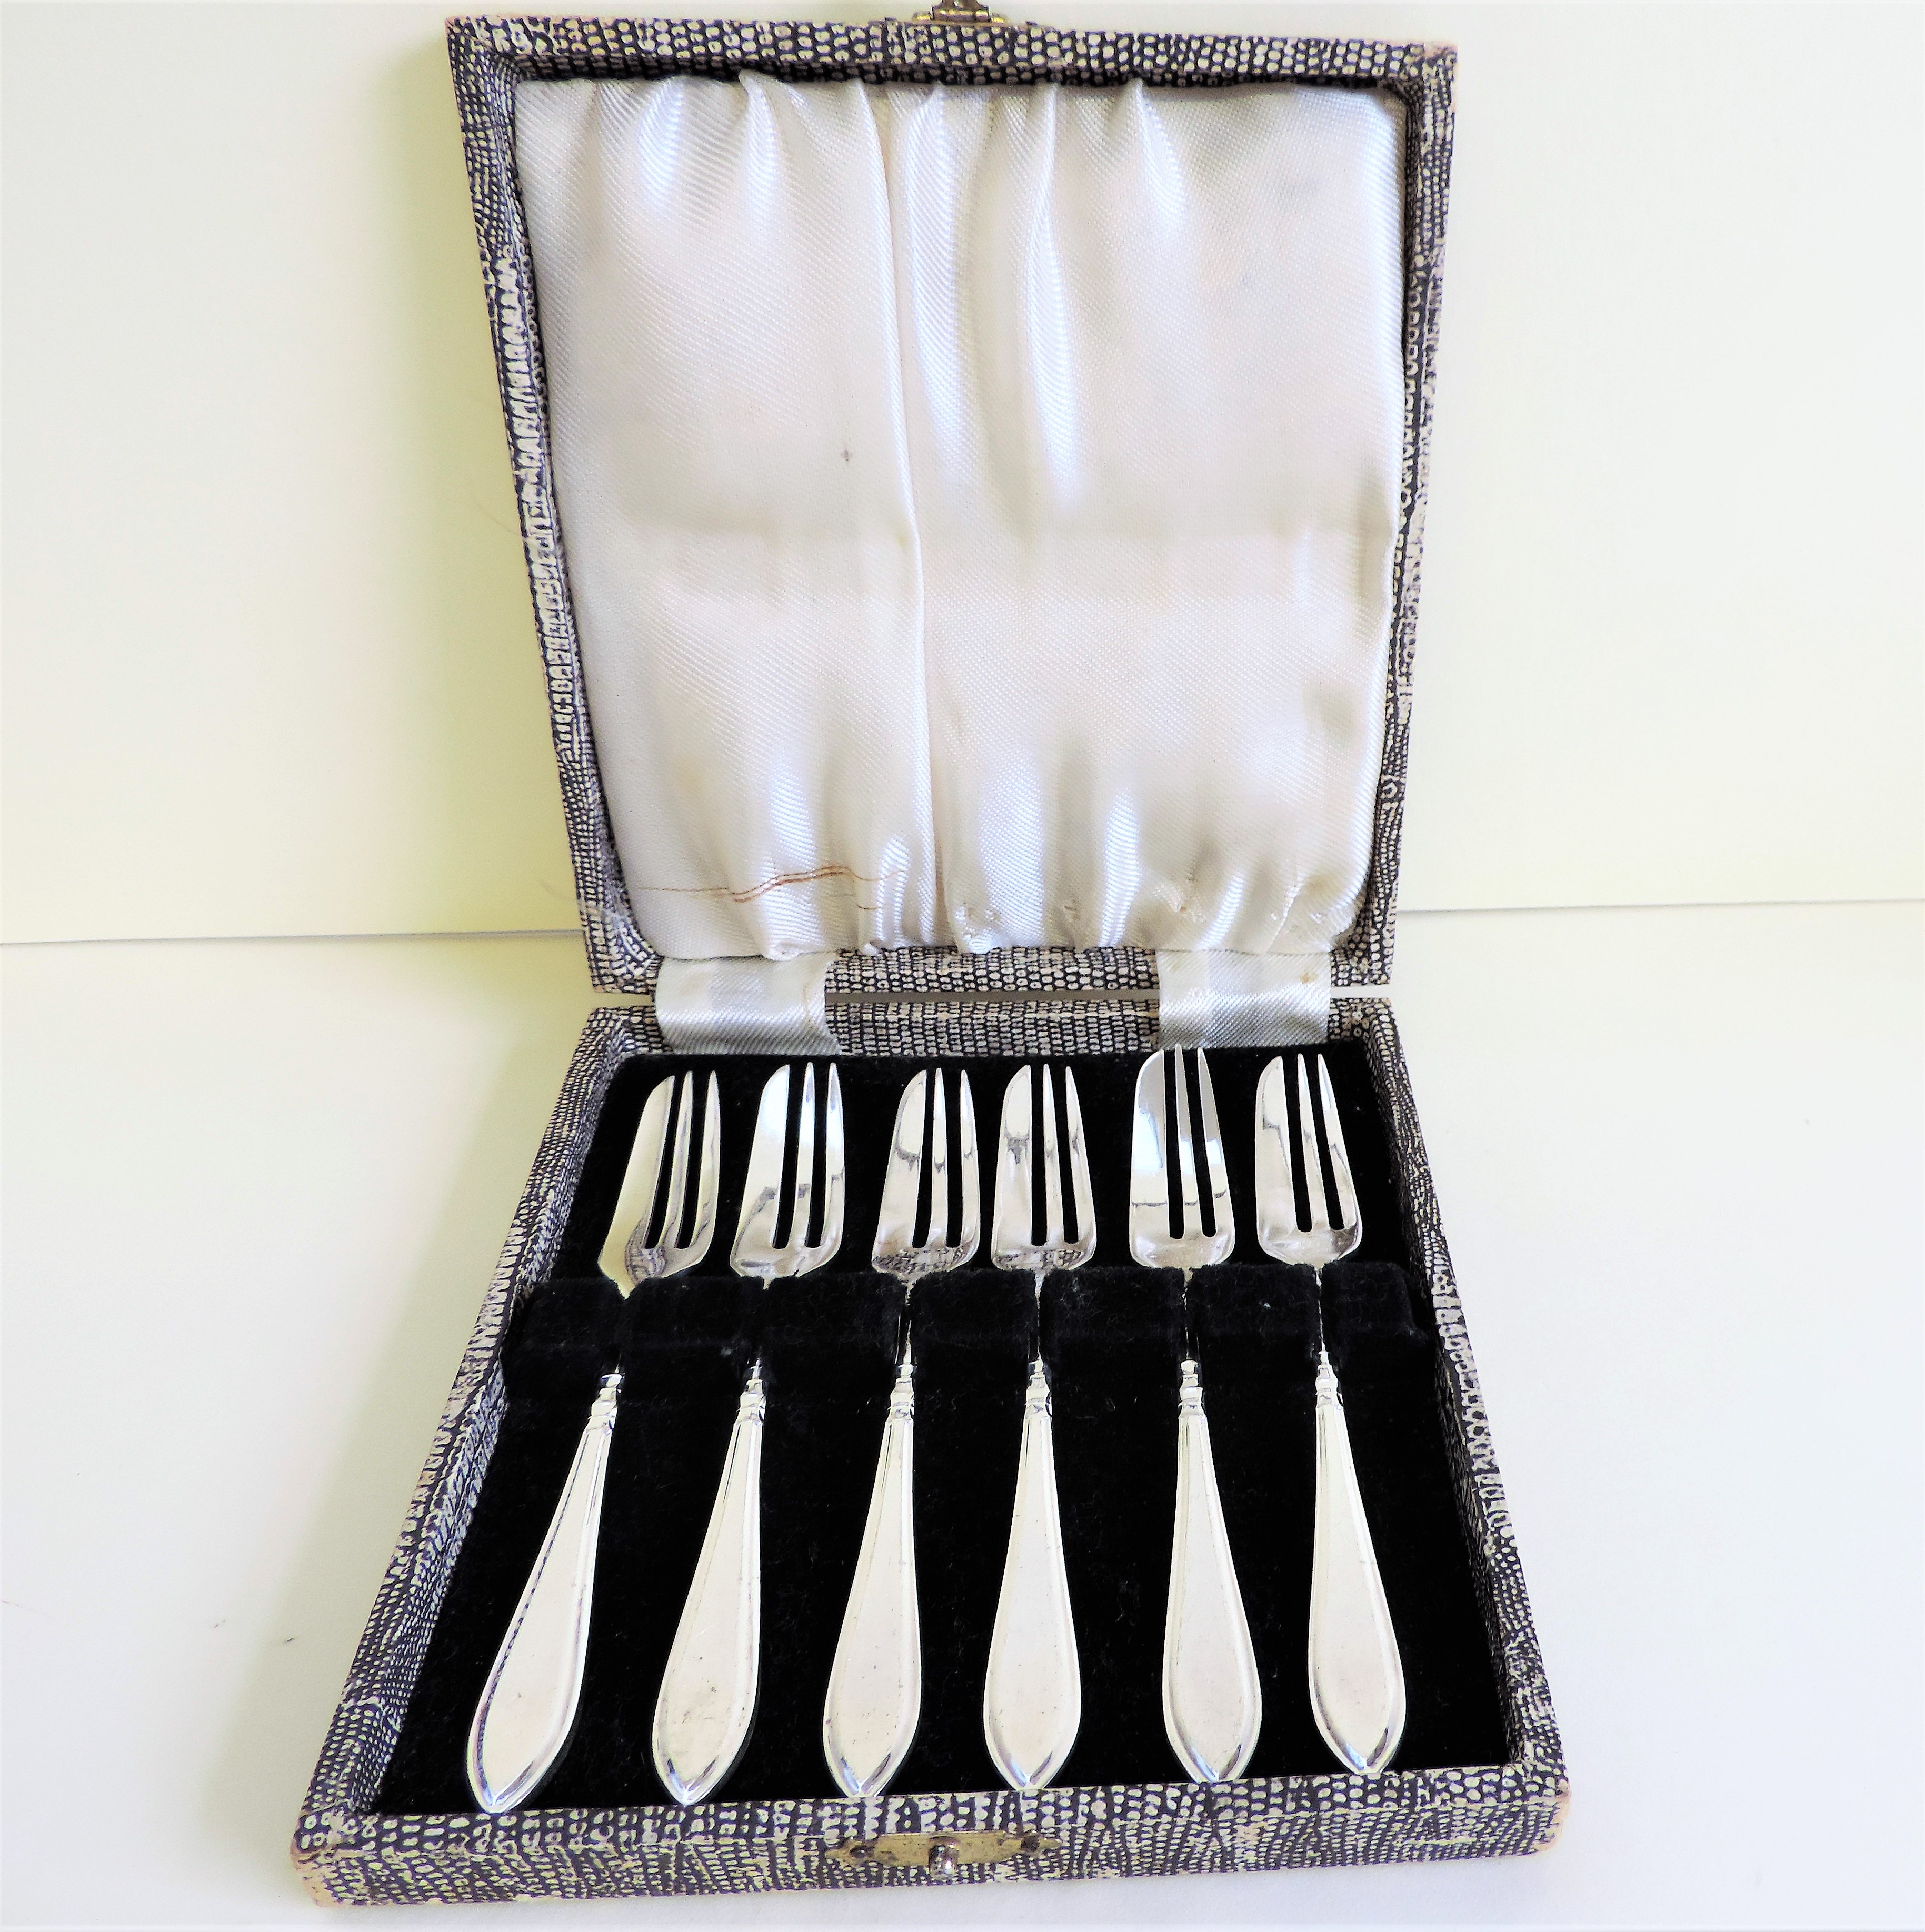 Vintage Silver Plate Pastry Forks - Image 2 of 2